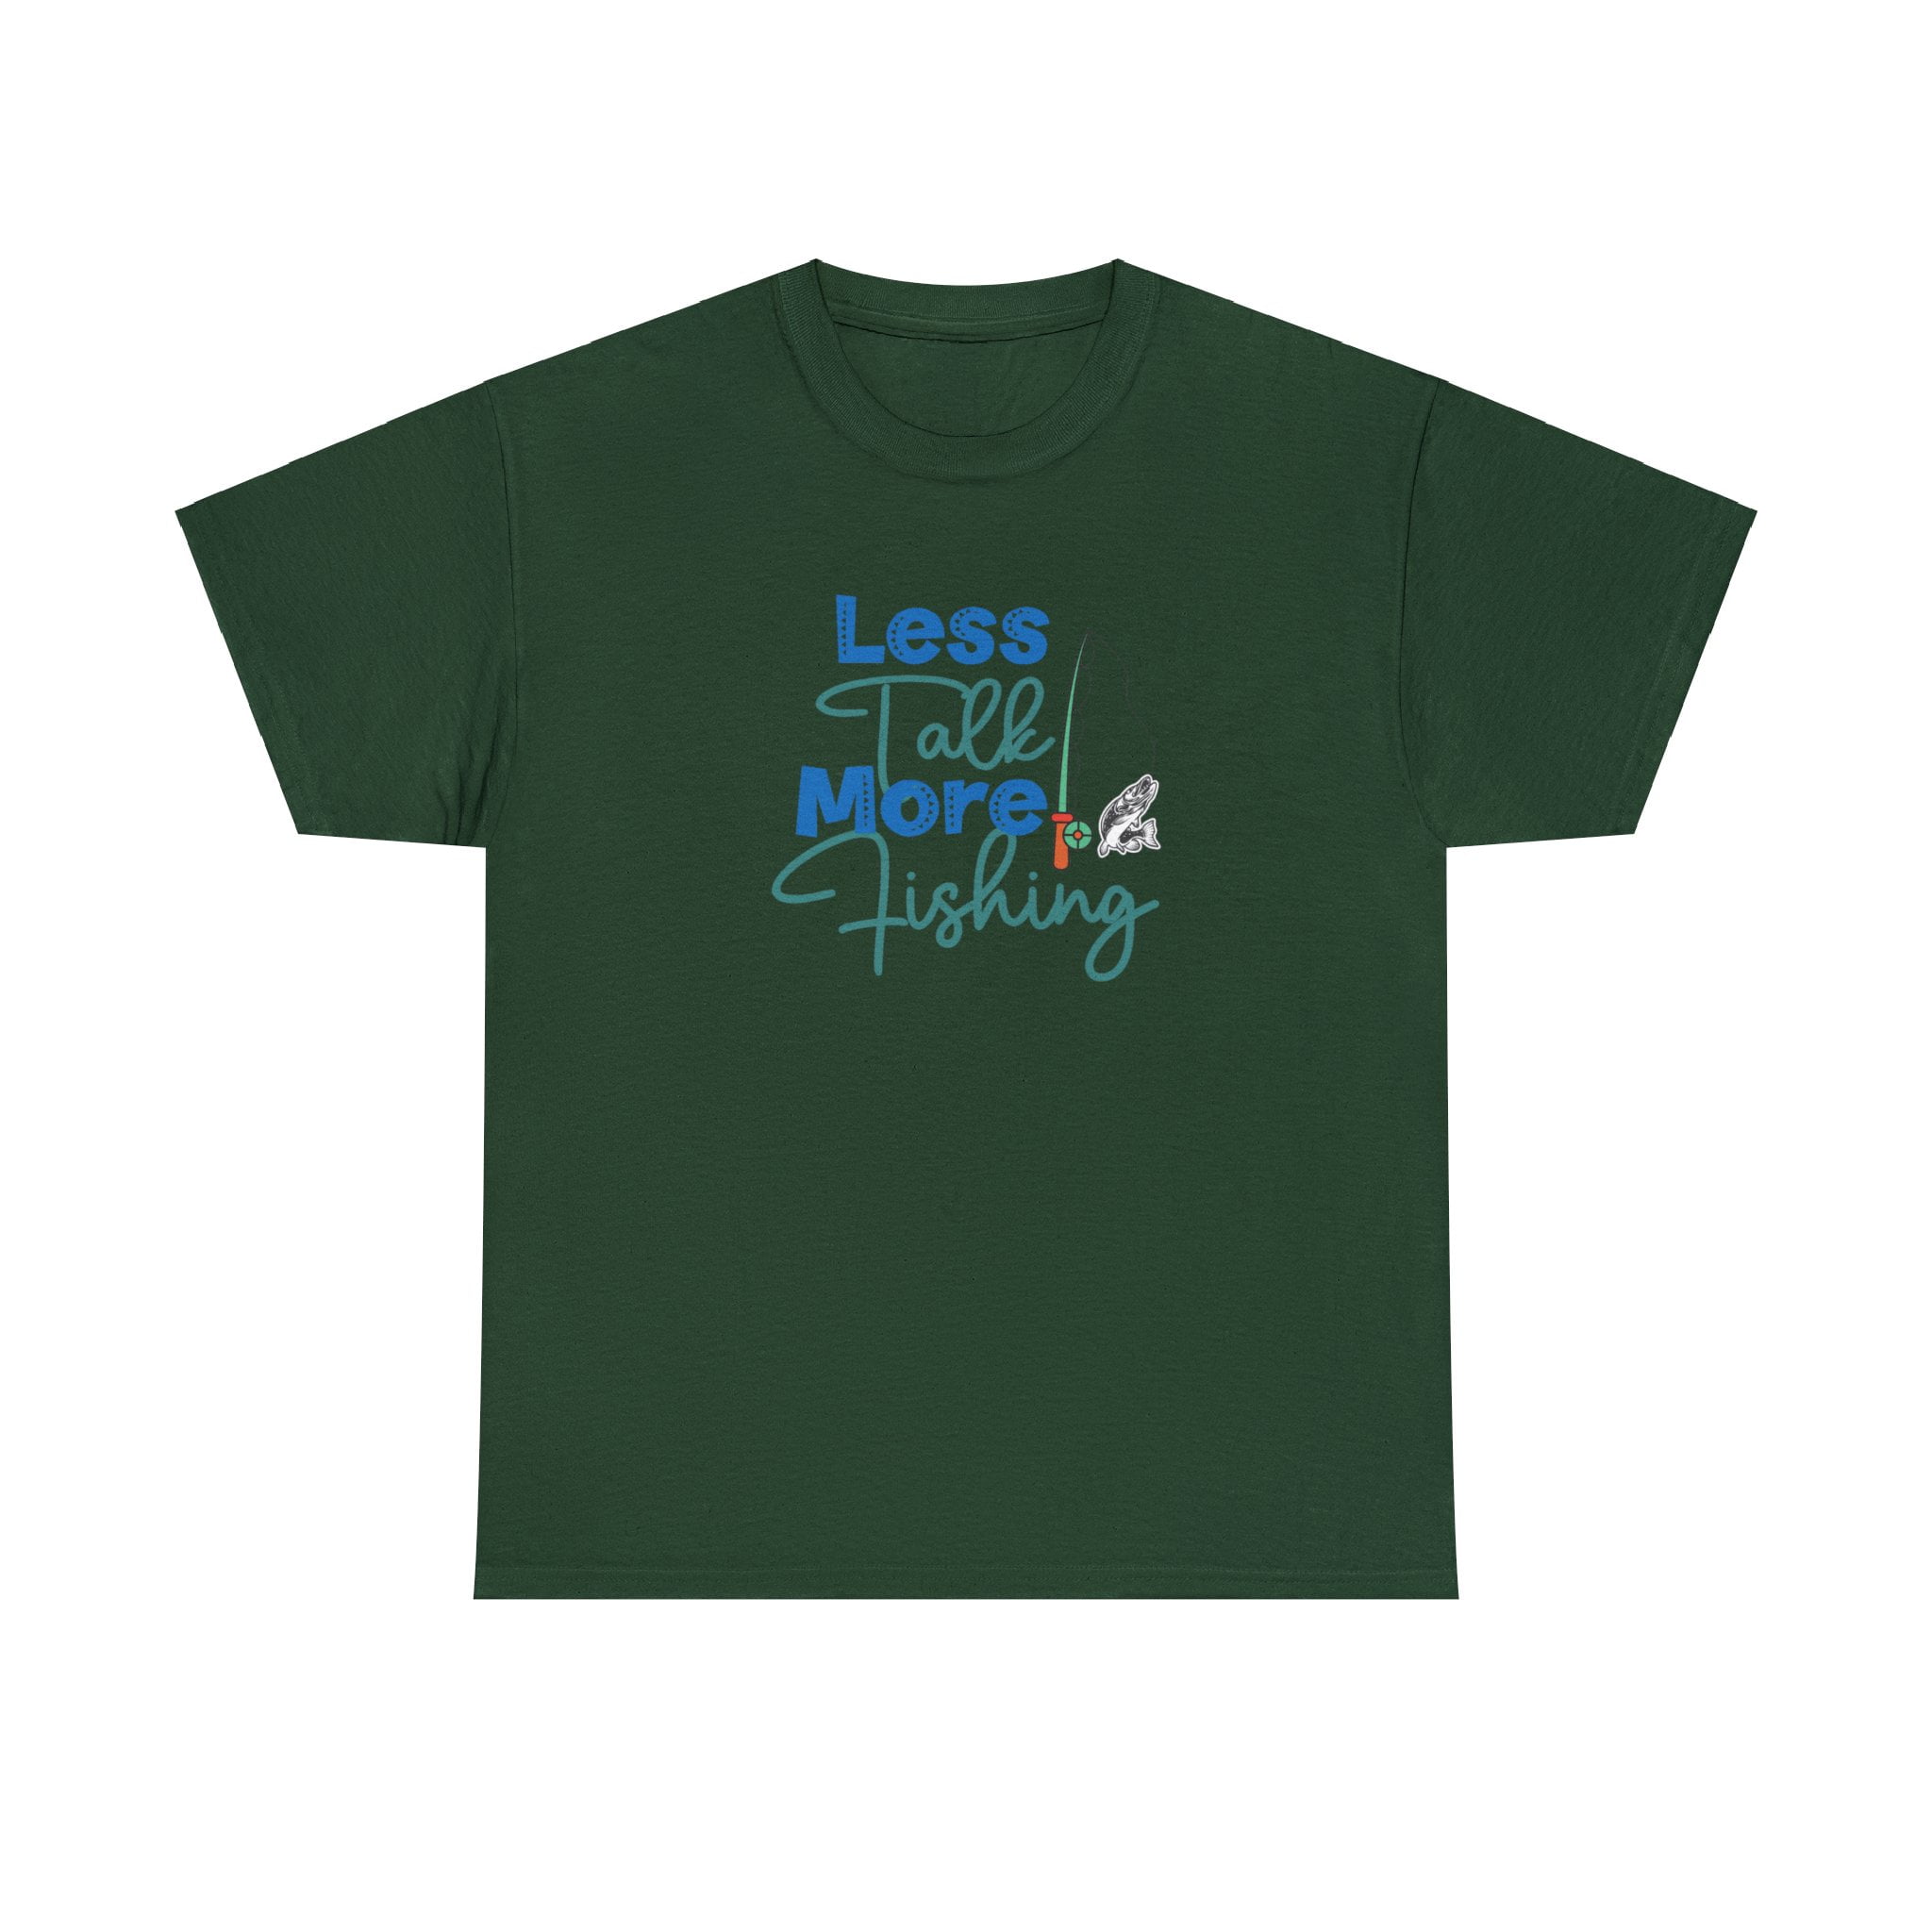 Fishing Shirt Fishing Shirt Sales Fishing Shirt Brands Boys